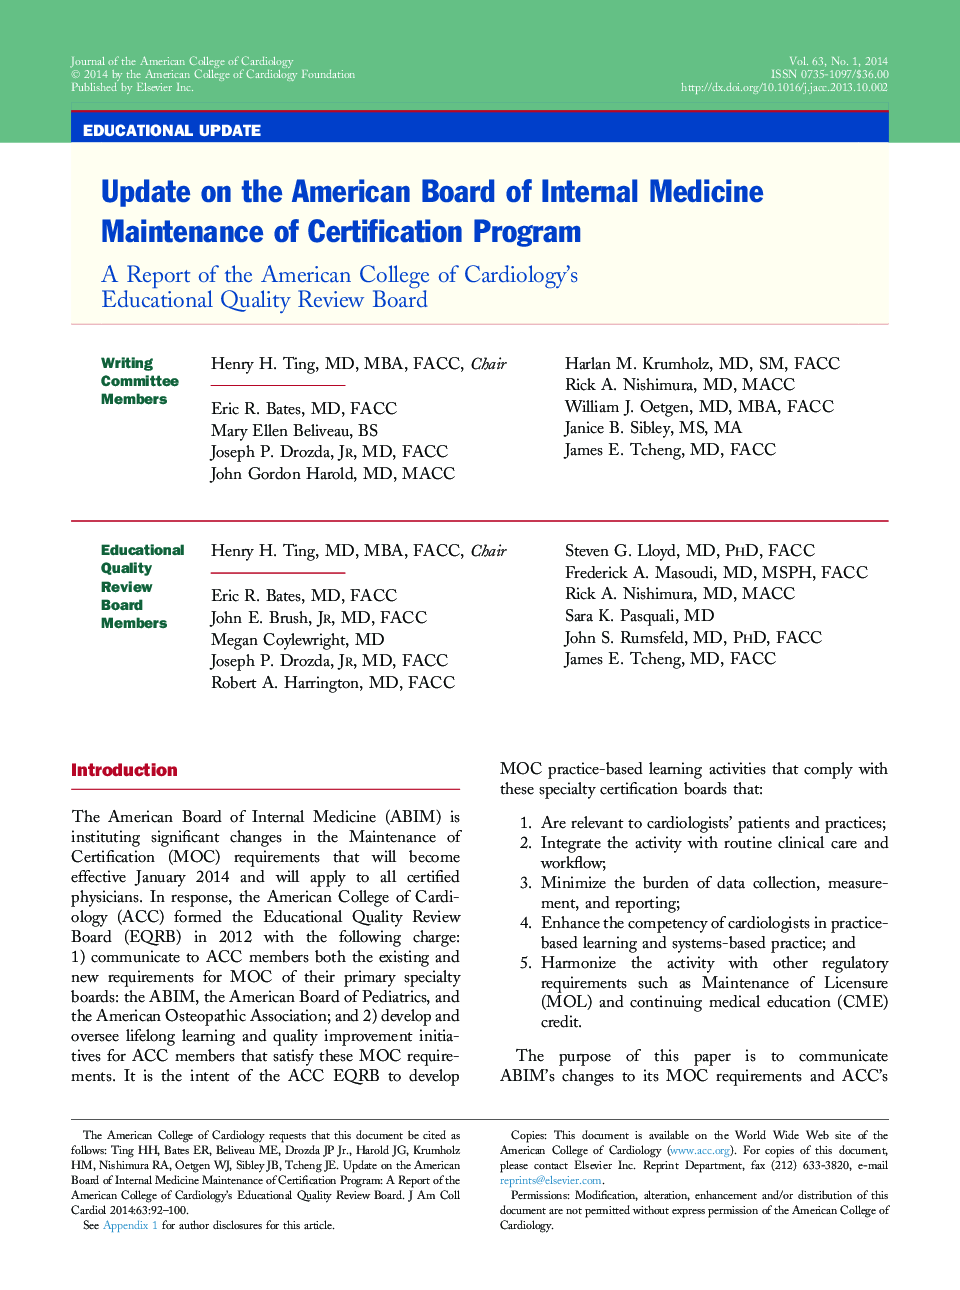 Update on the American Board of Internal Medicine Maintenance of Certification Program